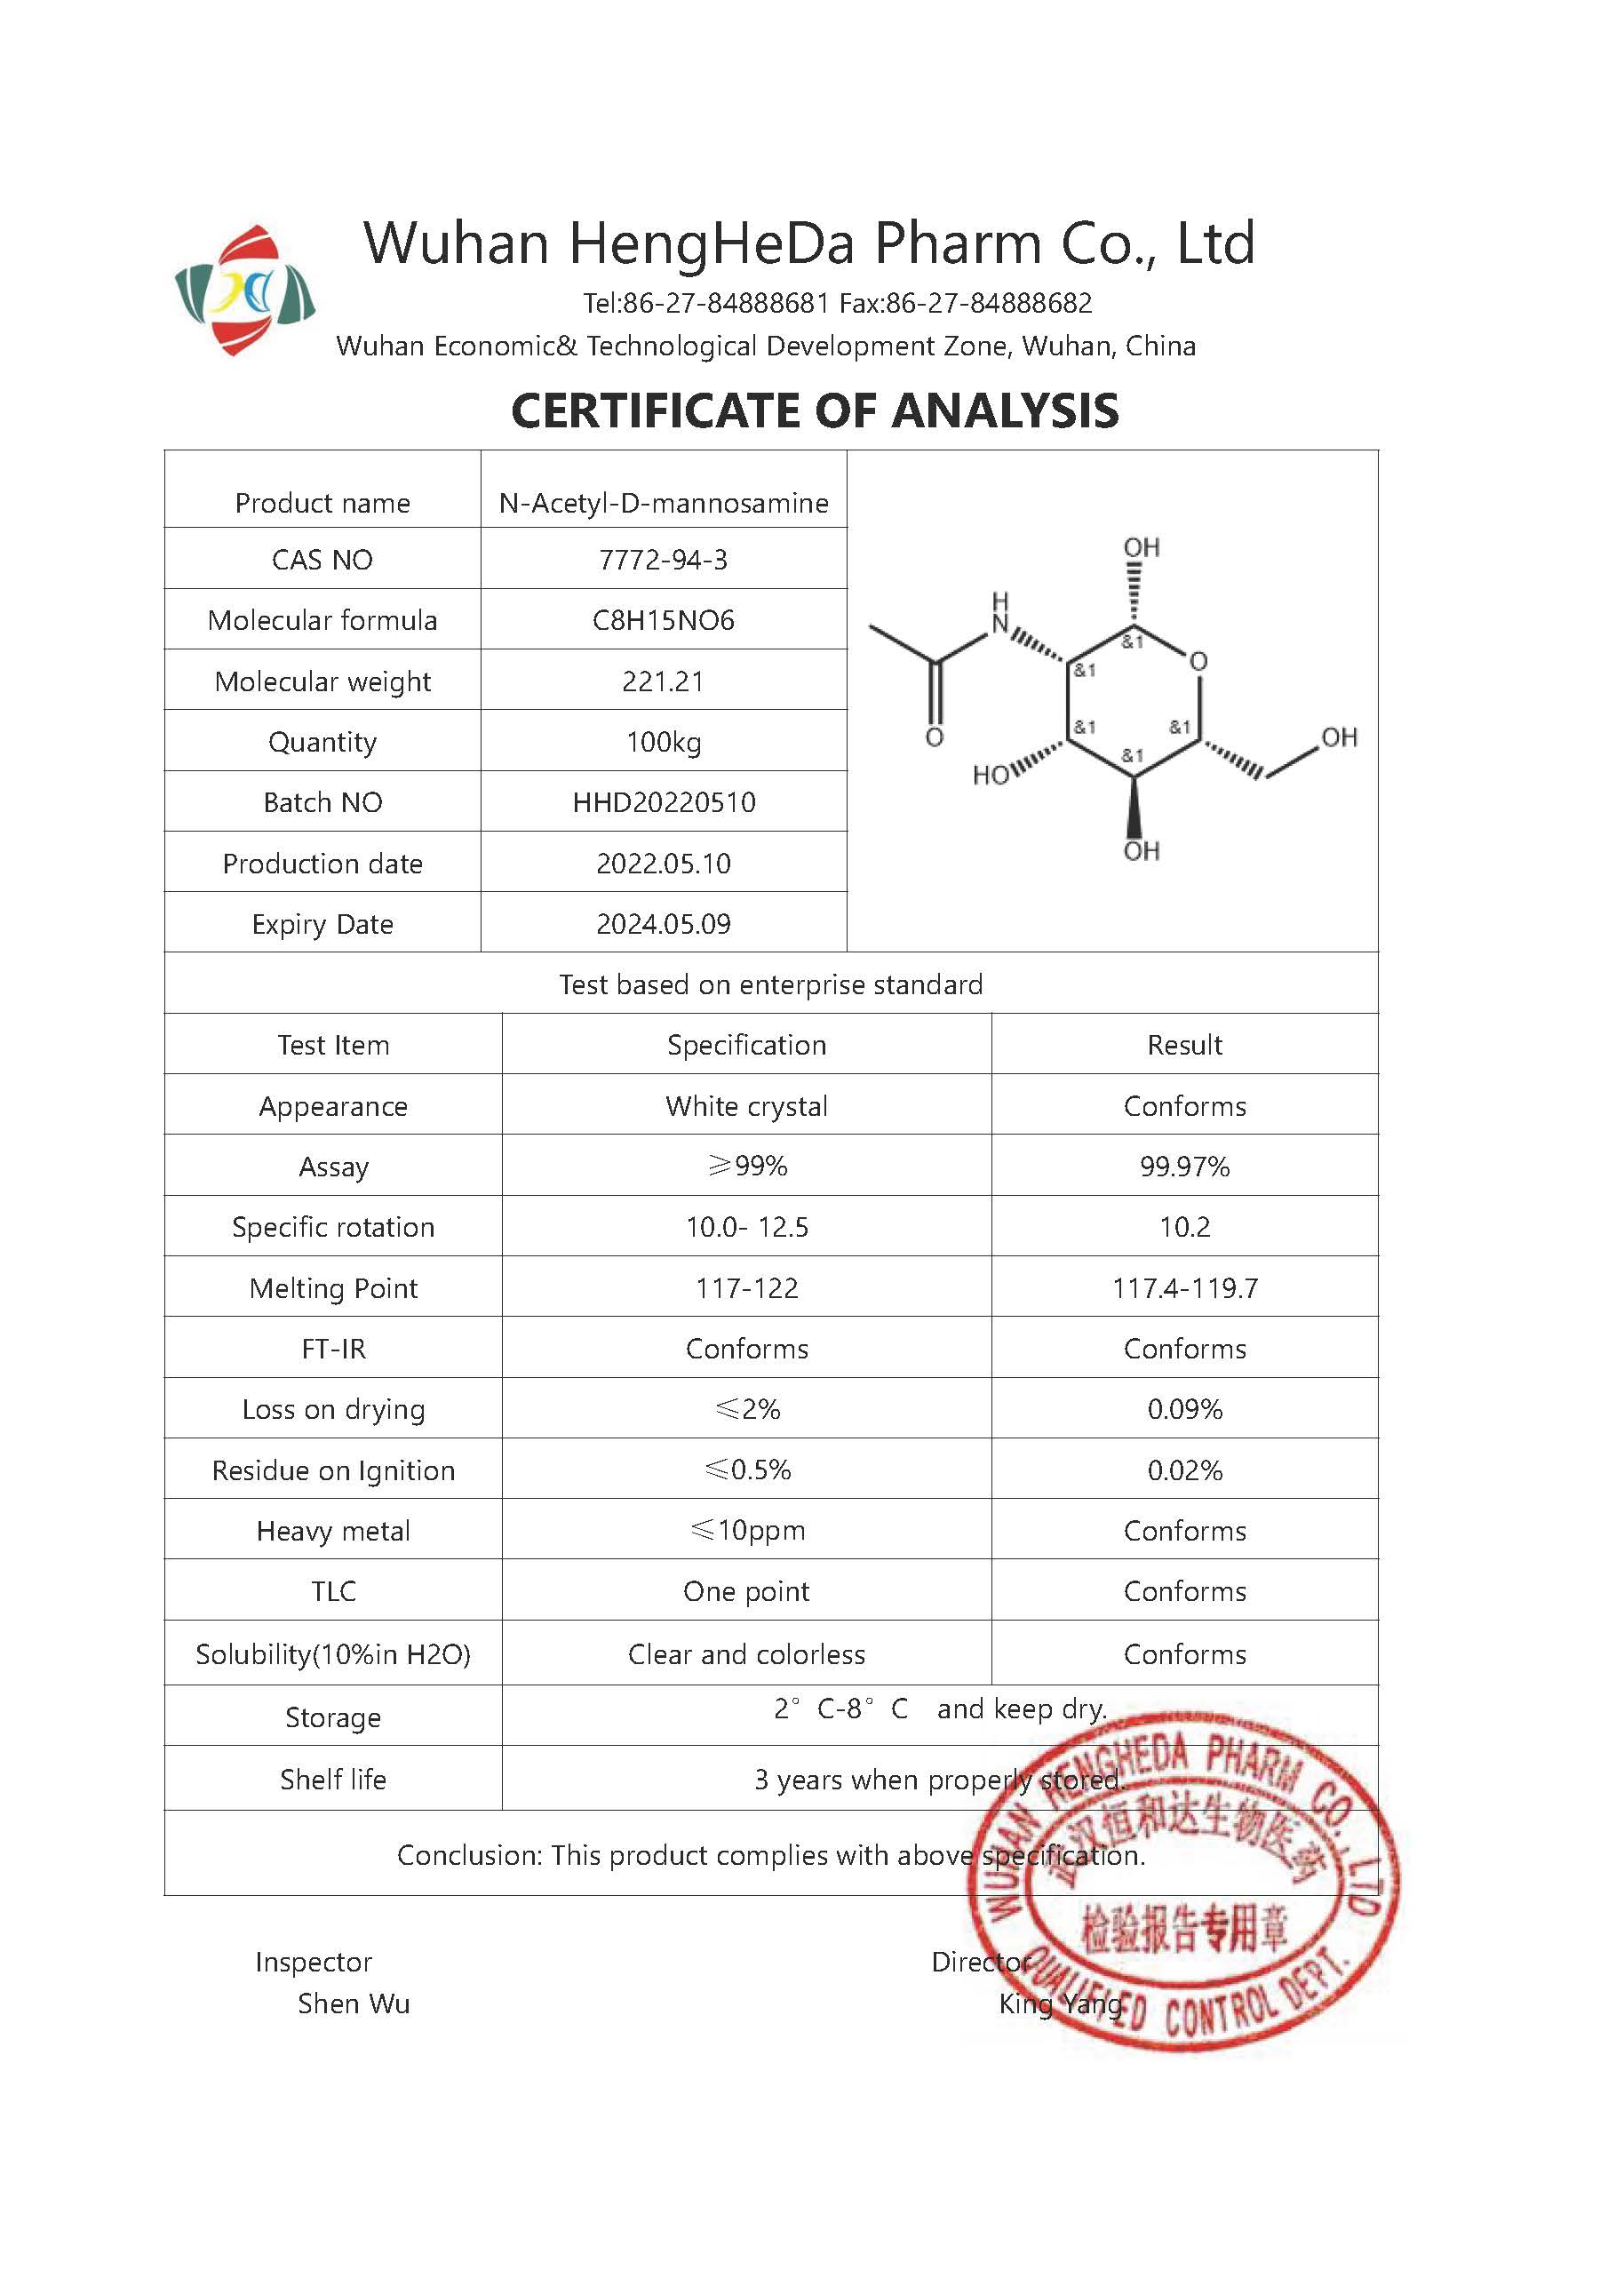 Kup N-acetylo-D-mannozamina CAS 7772-94-3,N-acetylo-D-mannozamina CAS 7772-94-3 Cena,N-acetylo-D-mannozamina CAS 7772-94-3 marki,N-acetylo-D-mannozamina CAS 7772-94-3 Producent,N-acetylo-D-mannozamina CAS 7772-94-3 Cytaty,N-acetylo-D-mannozamina CAS 7772-94-3 spółka,